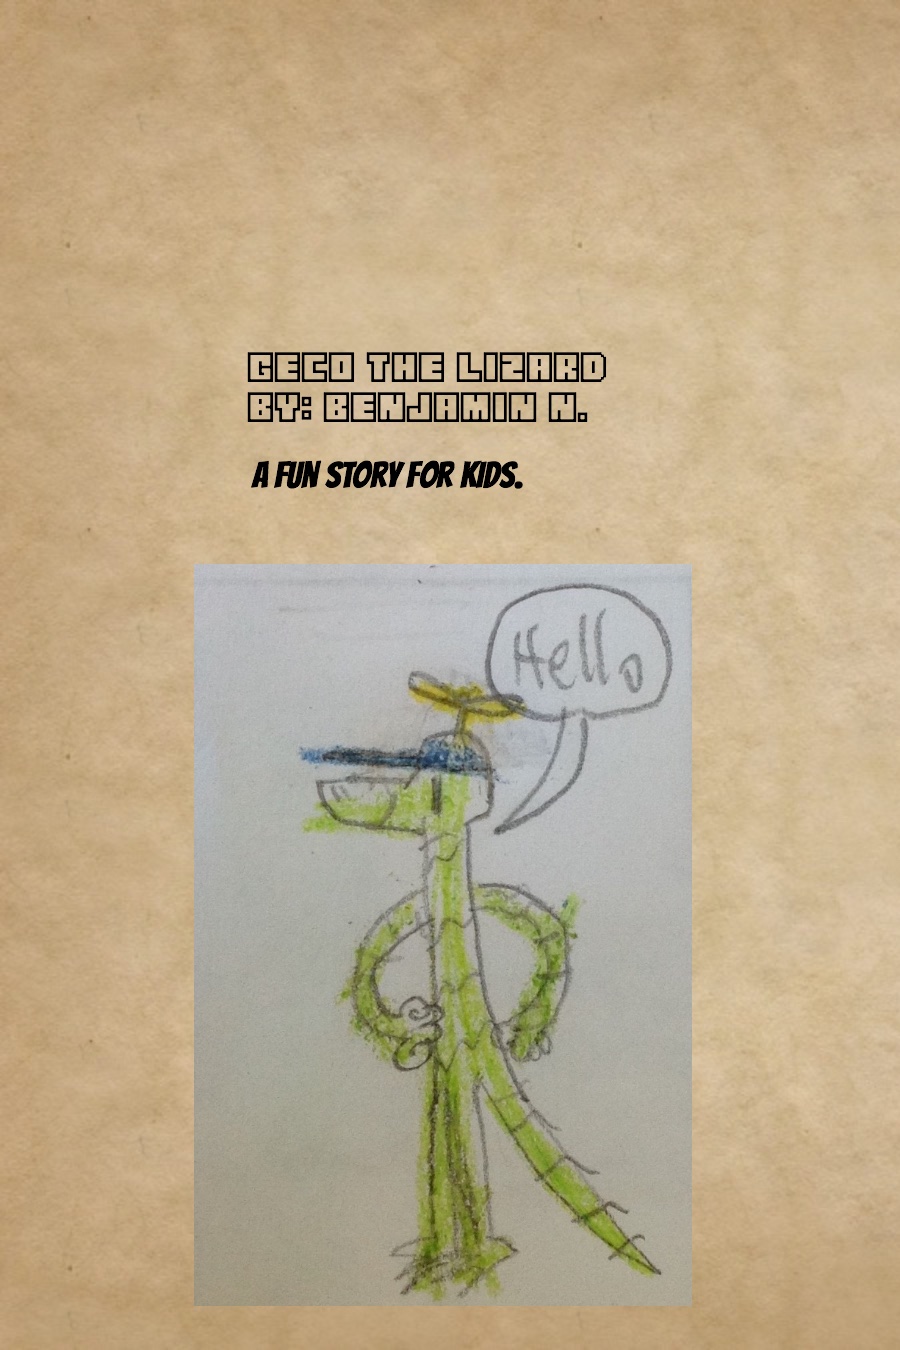 Geco the Lizard By Benjamin N